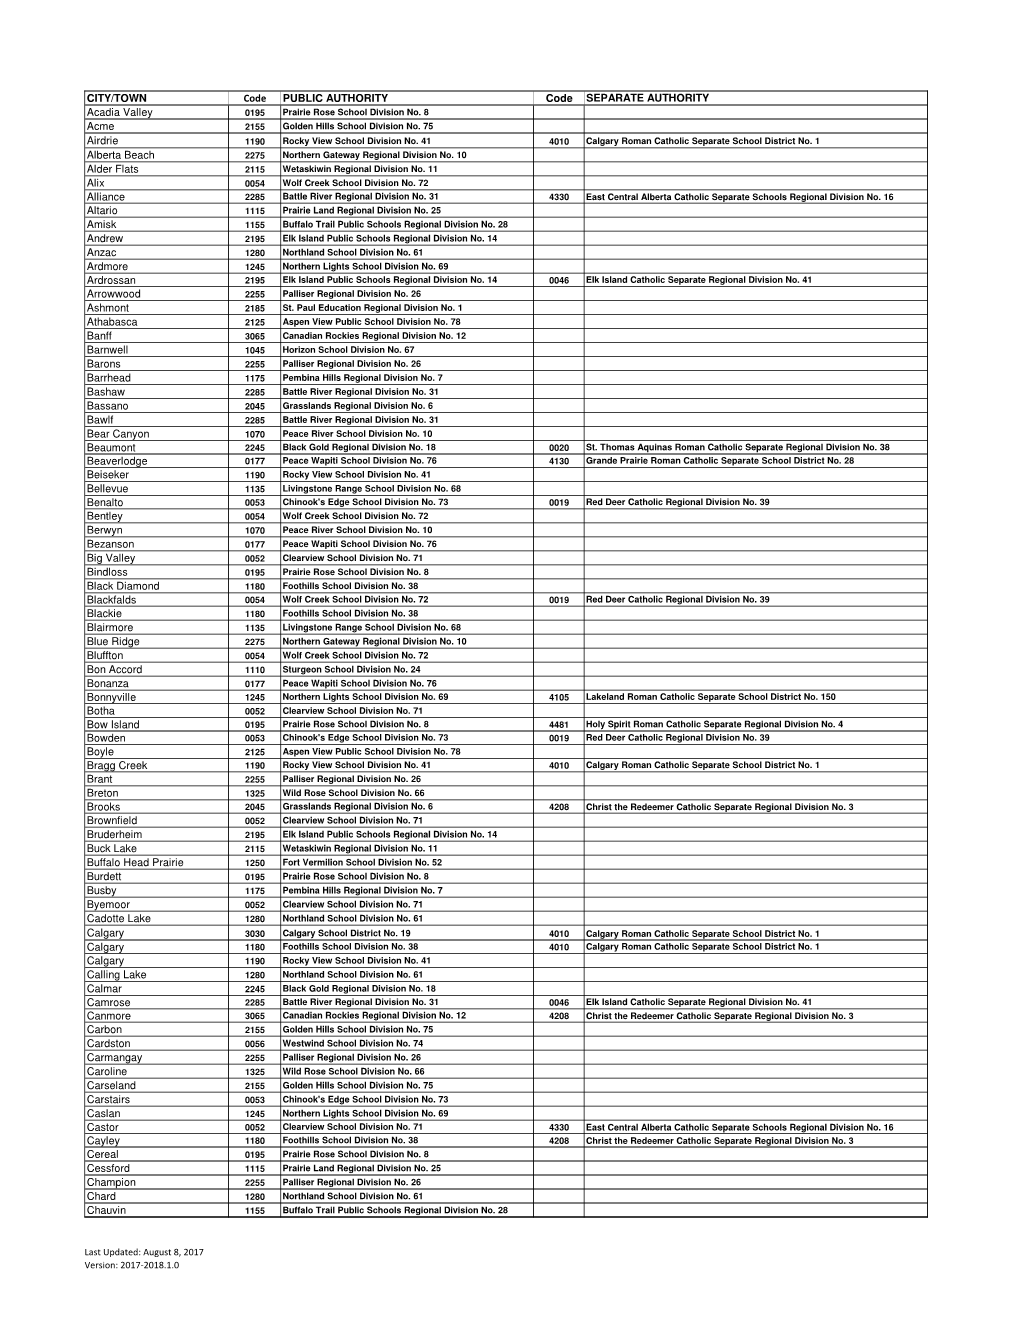 List of Resident Boards.Xlsx